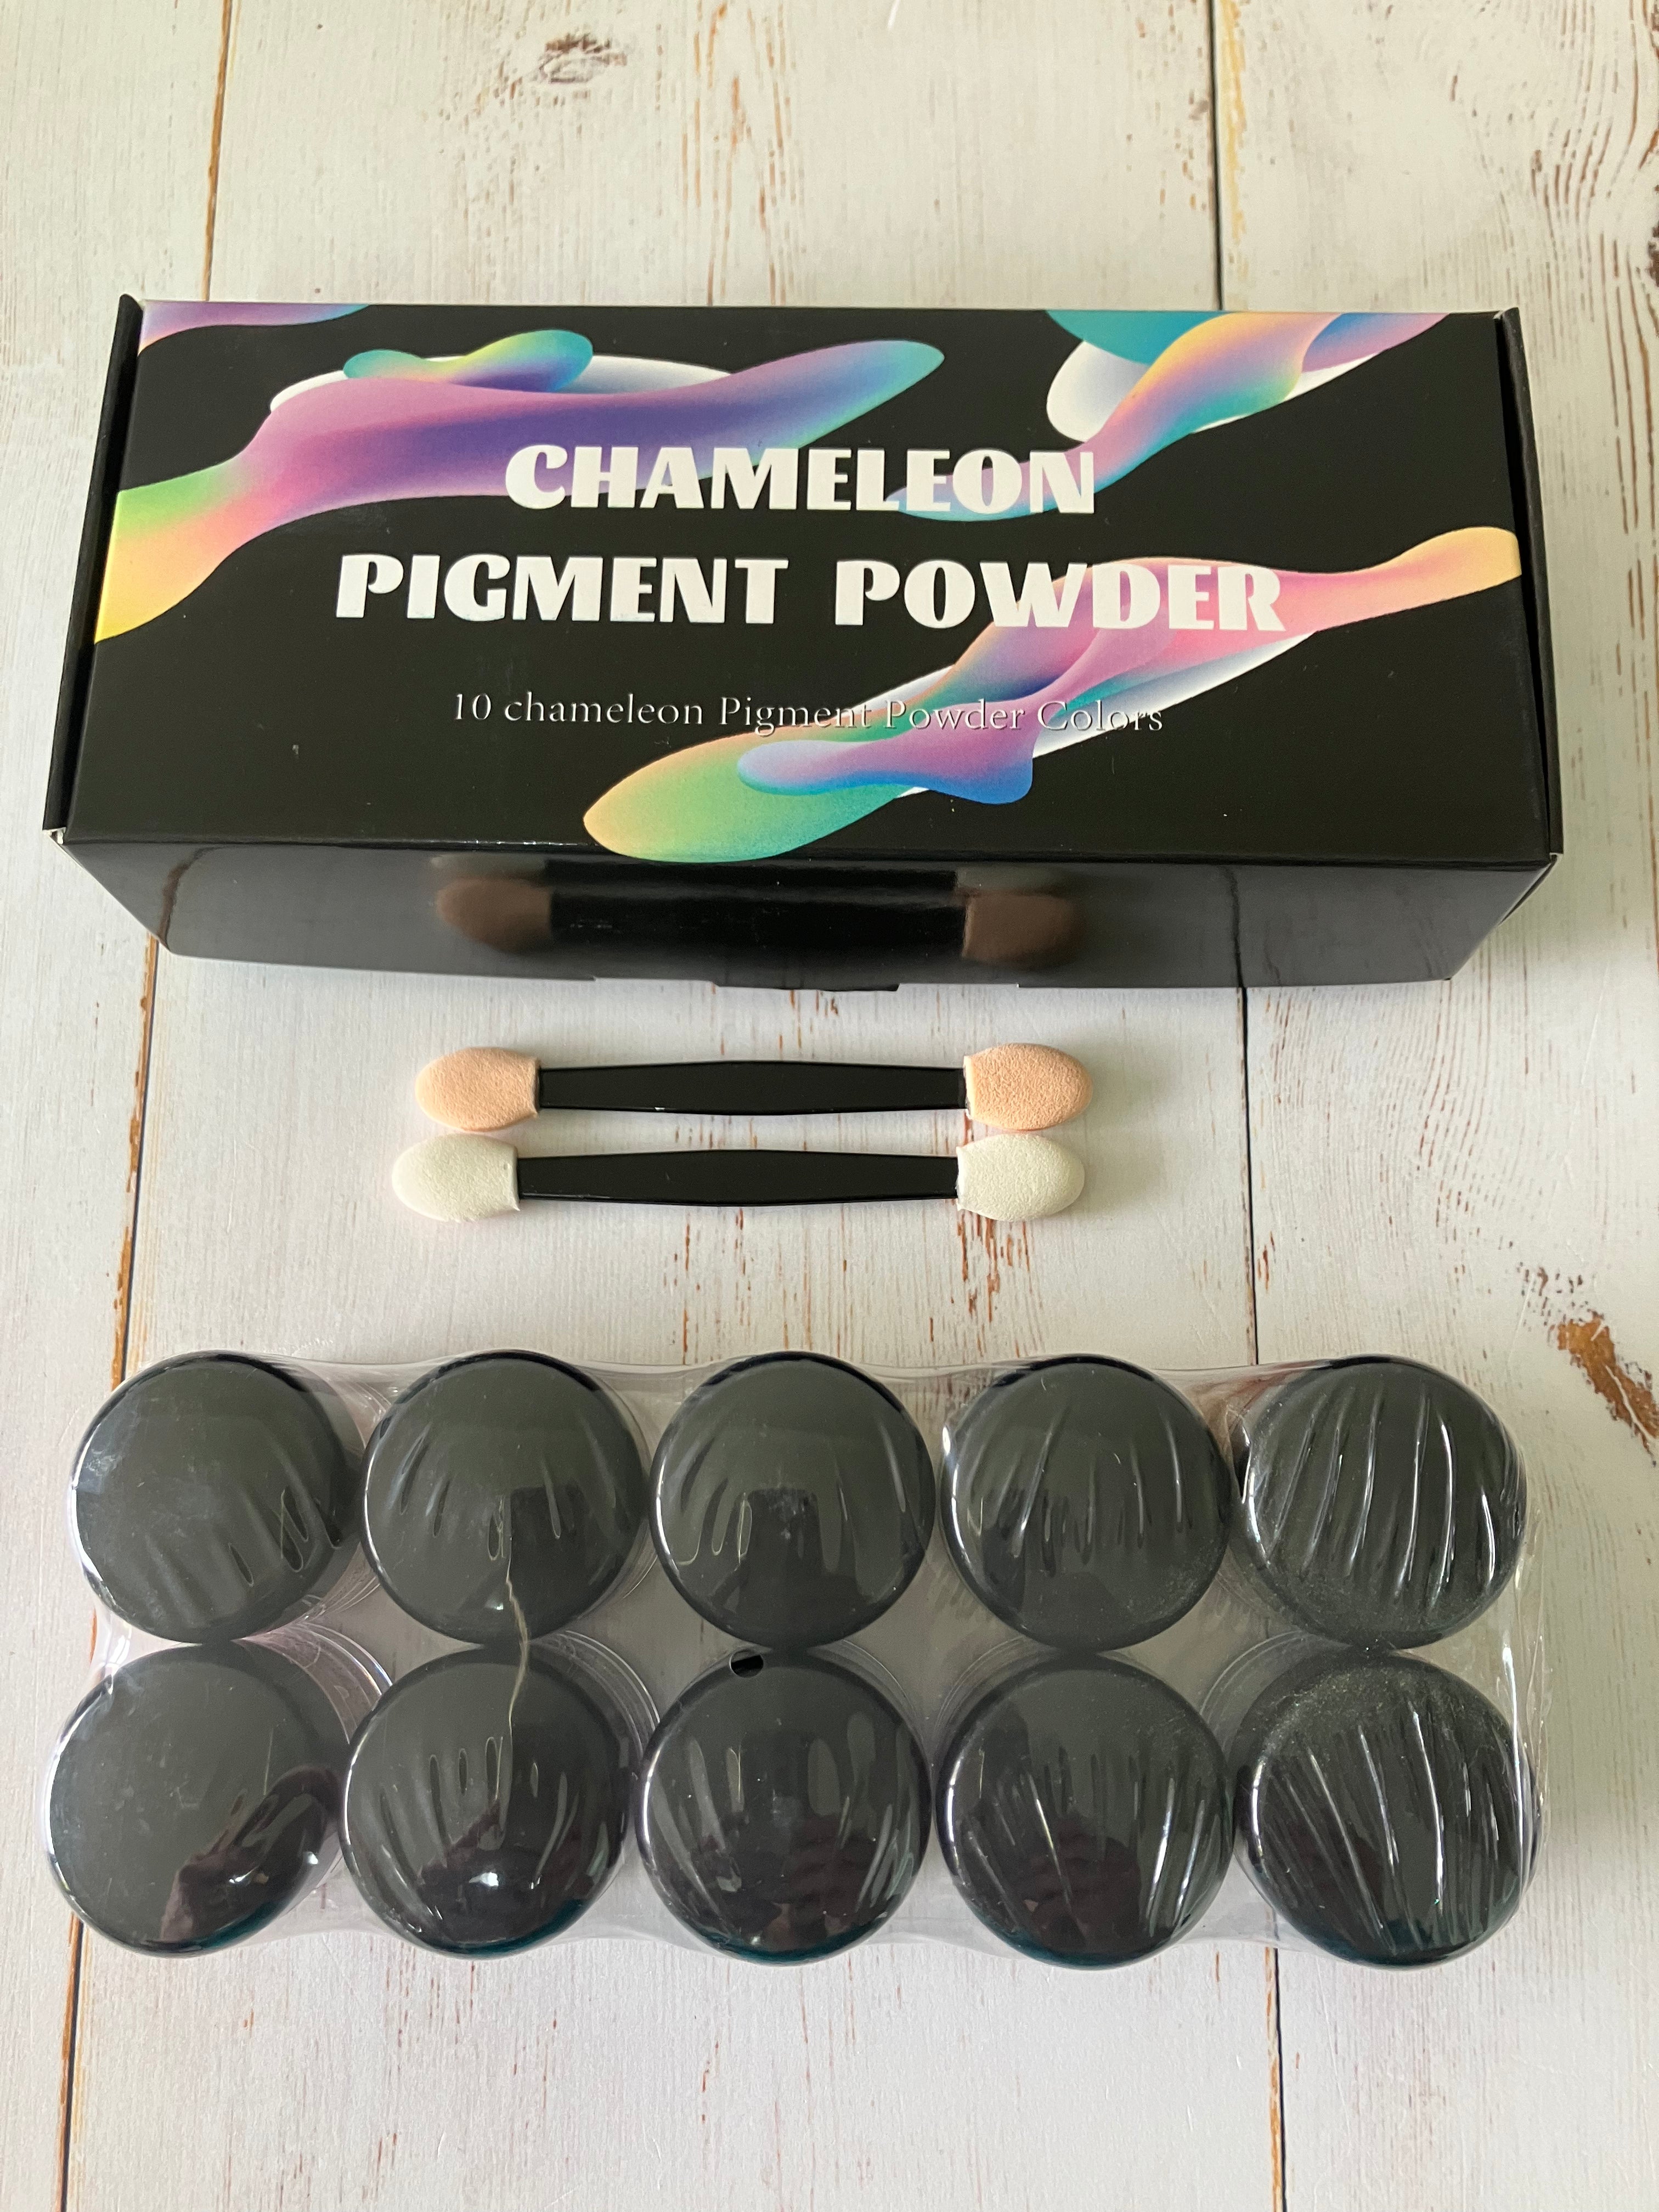 Chameleon Pigment Powders (10 in set) 3 Grams each